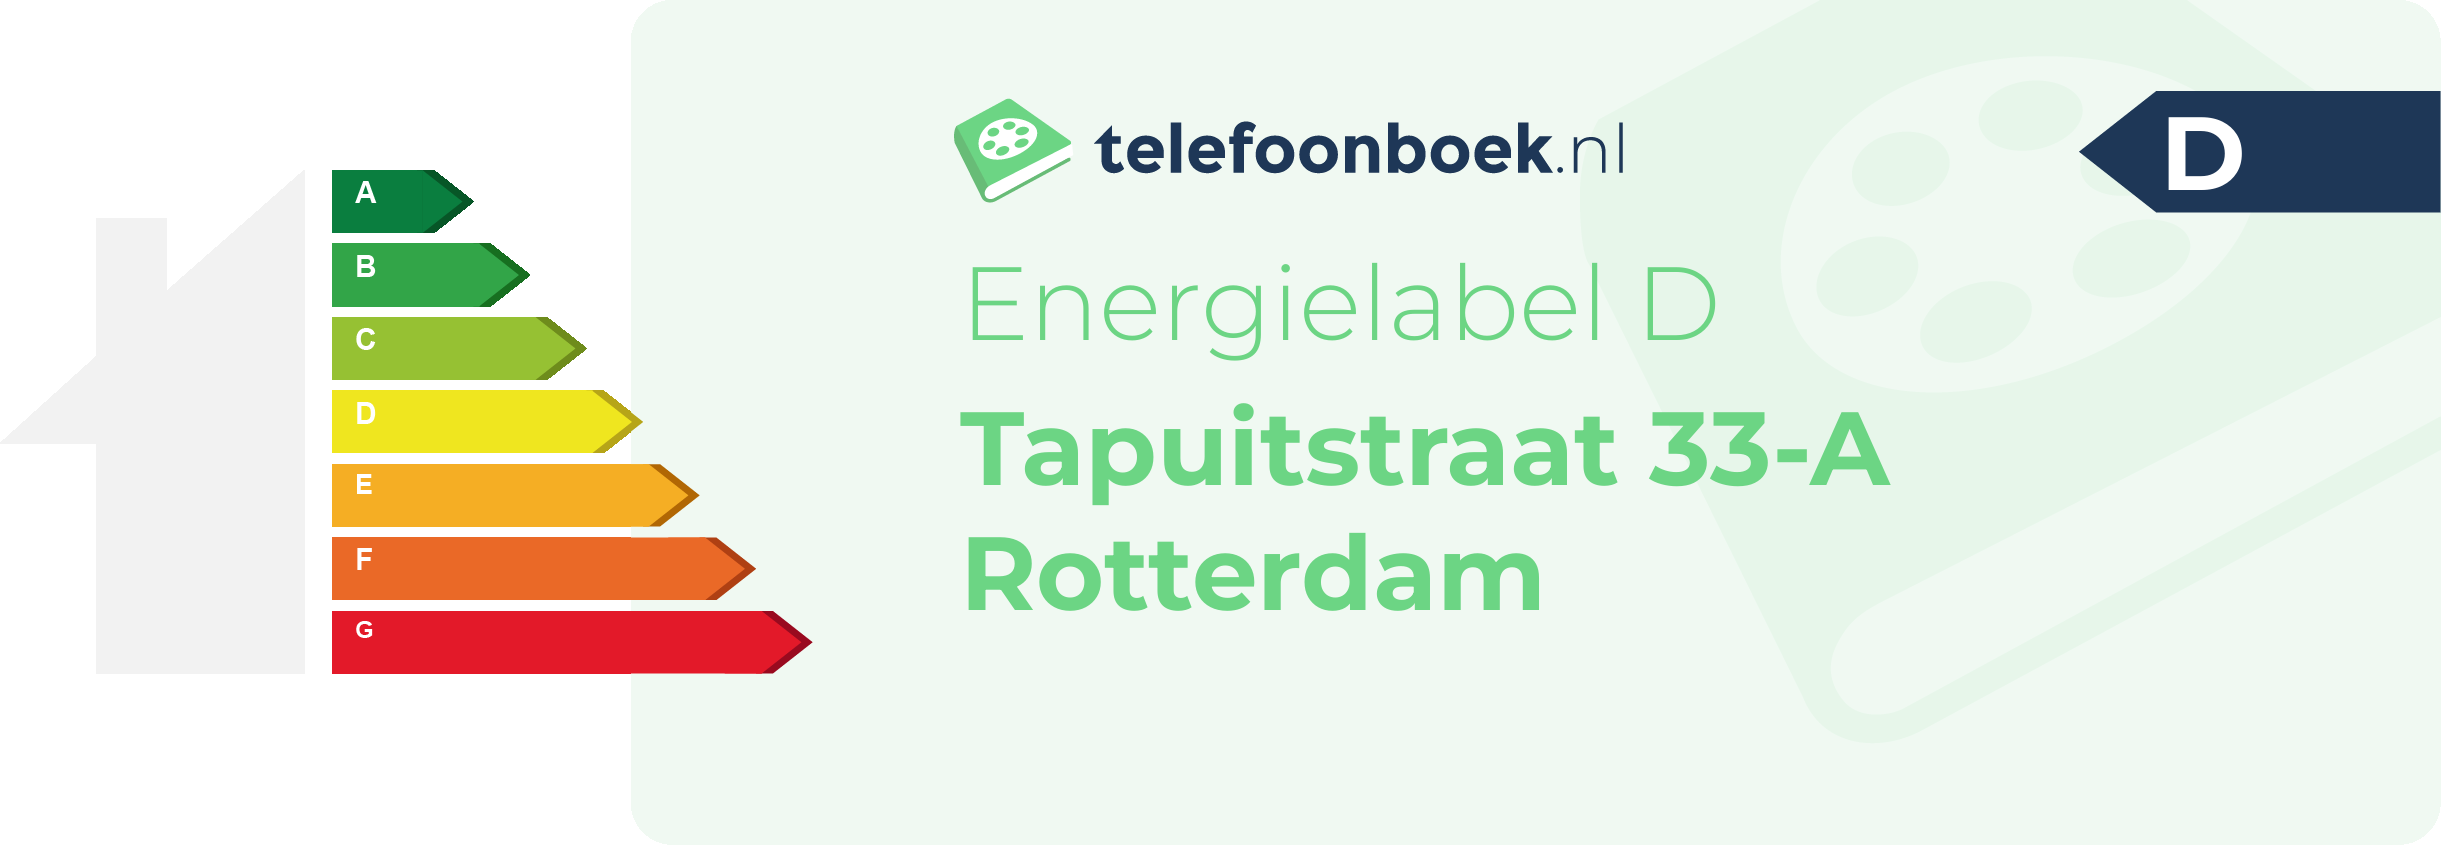 Energielabel Tapuitstraat 33-A Rotterdam